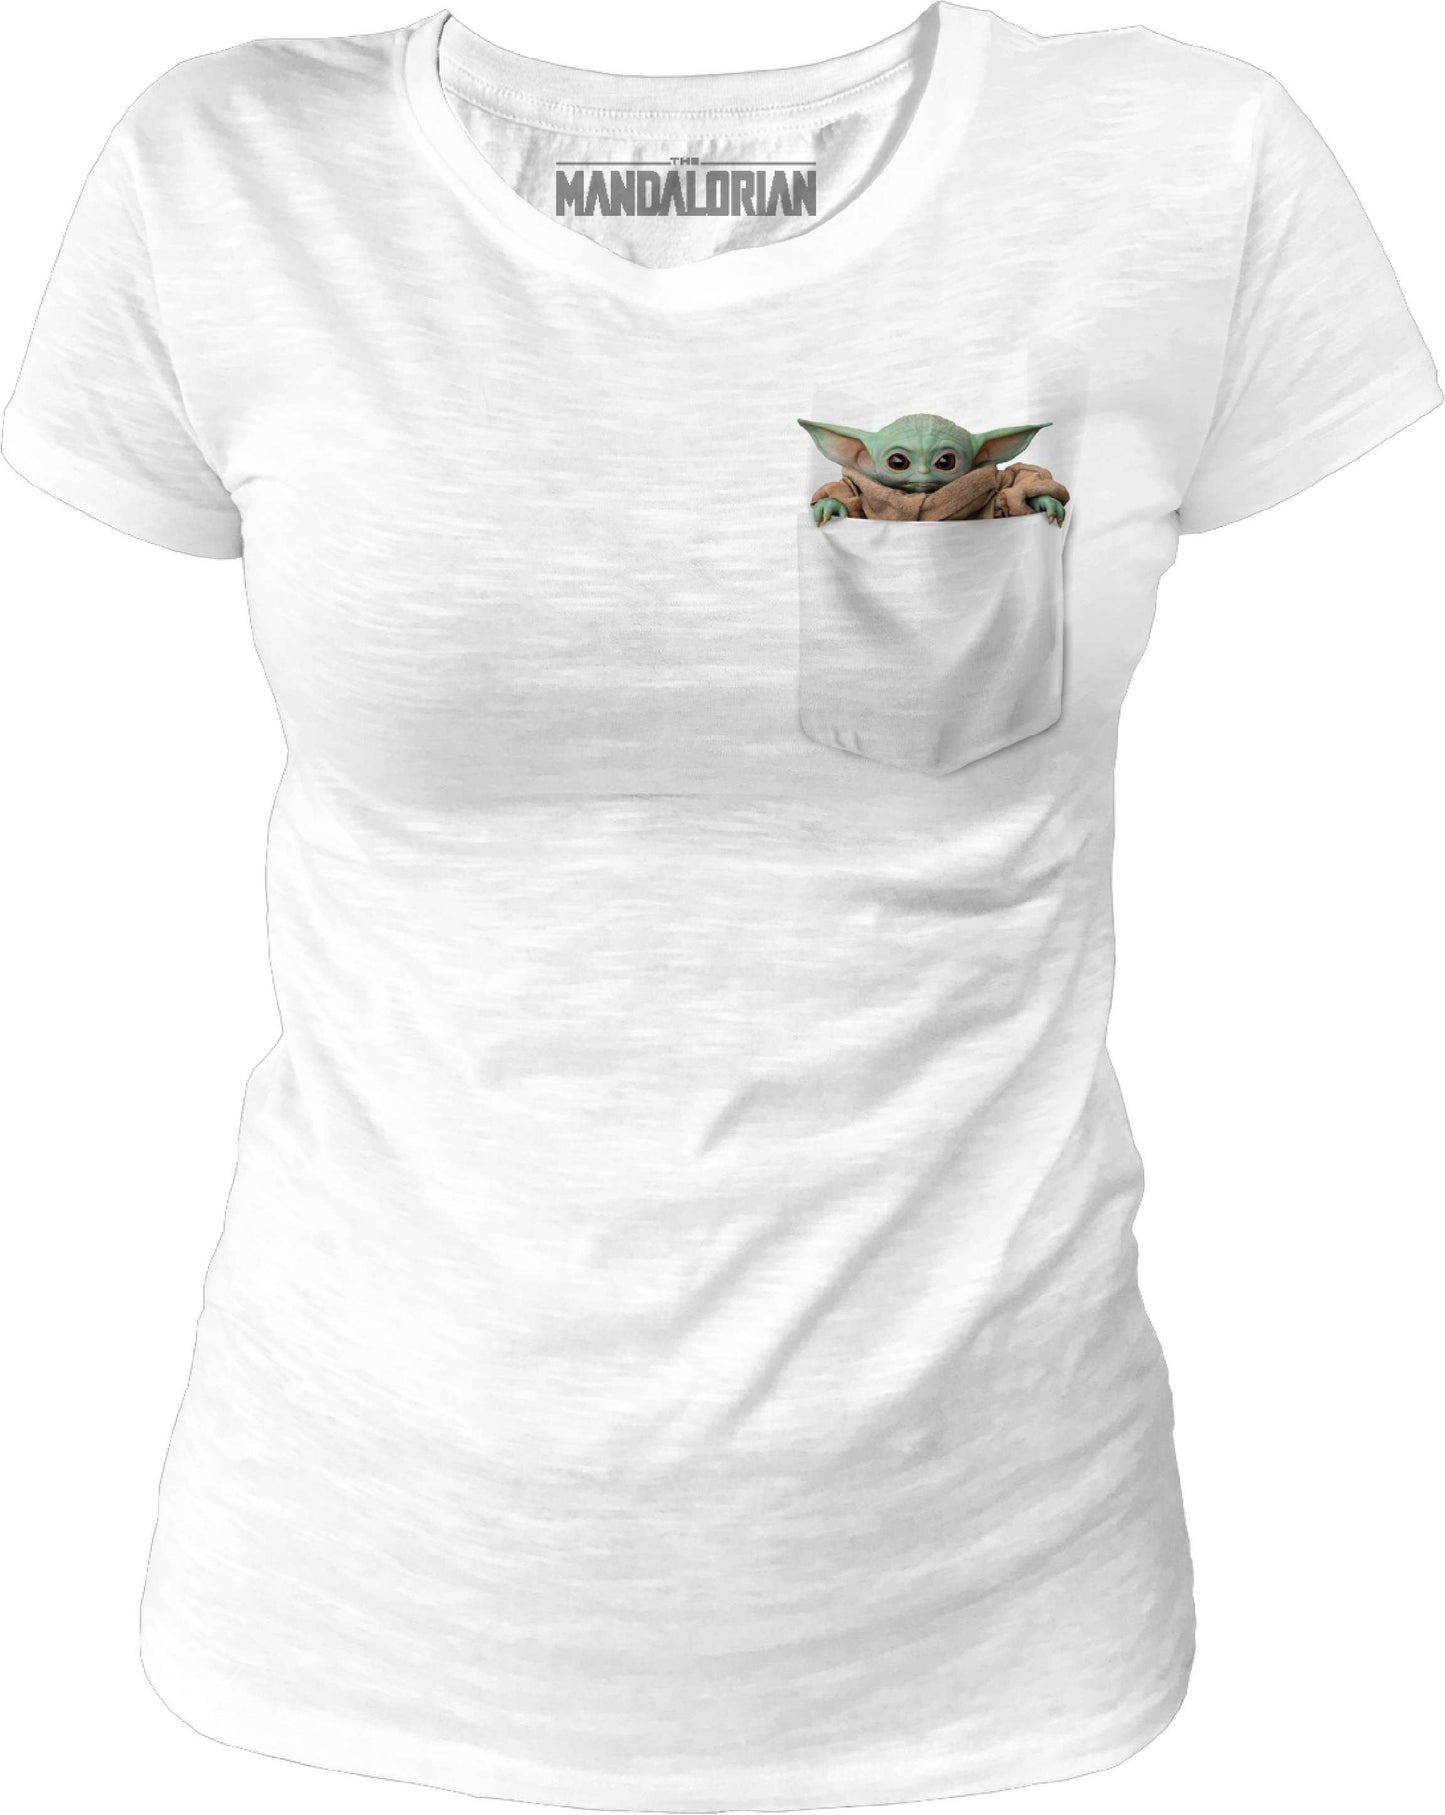 Star Wars Women's T-shirt - The Mandalorian - Baby Yoda Pocket